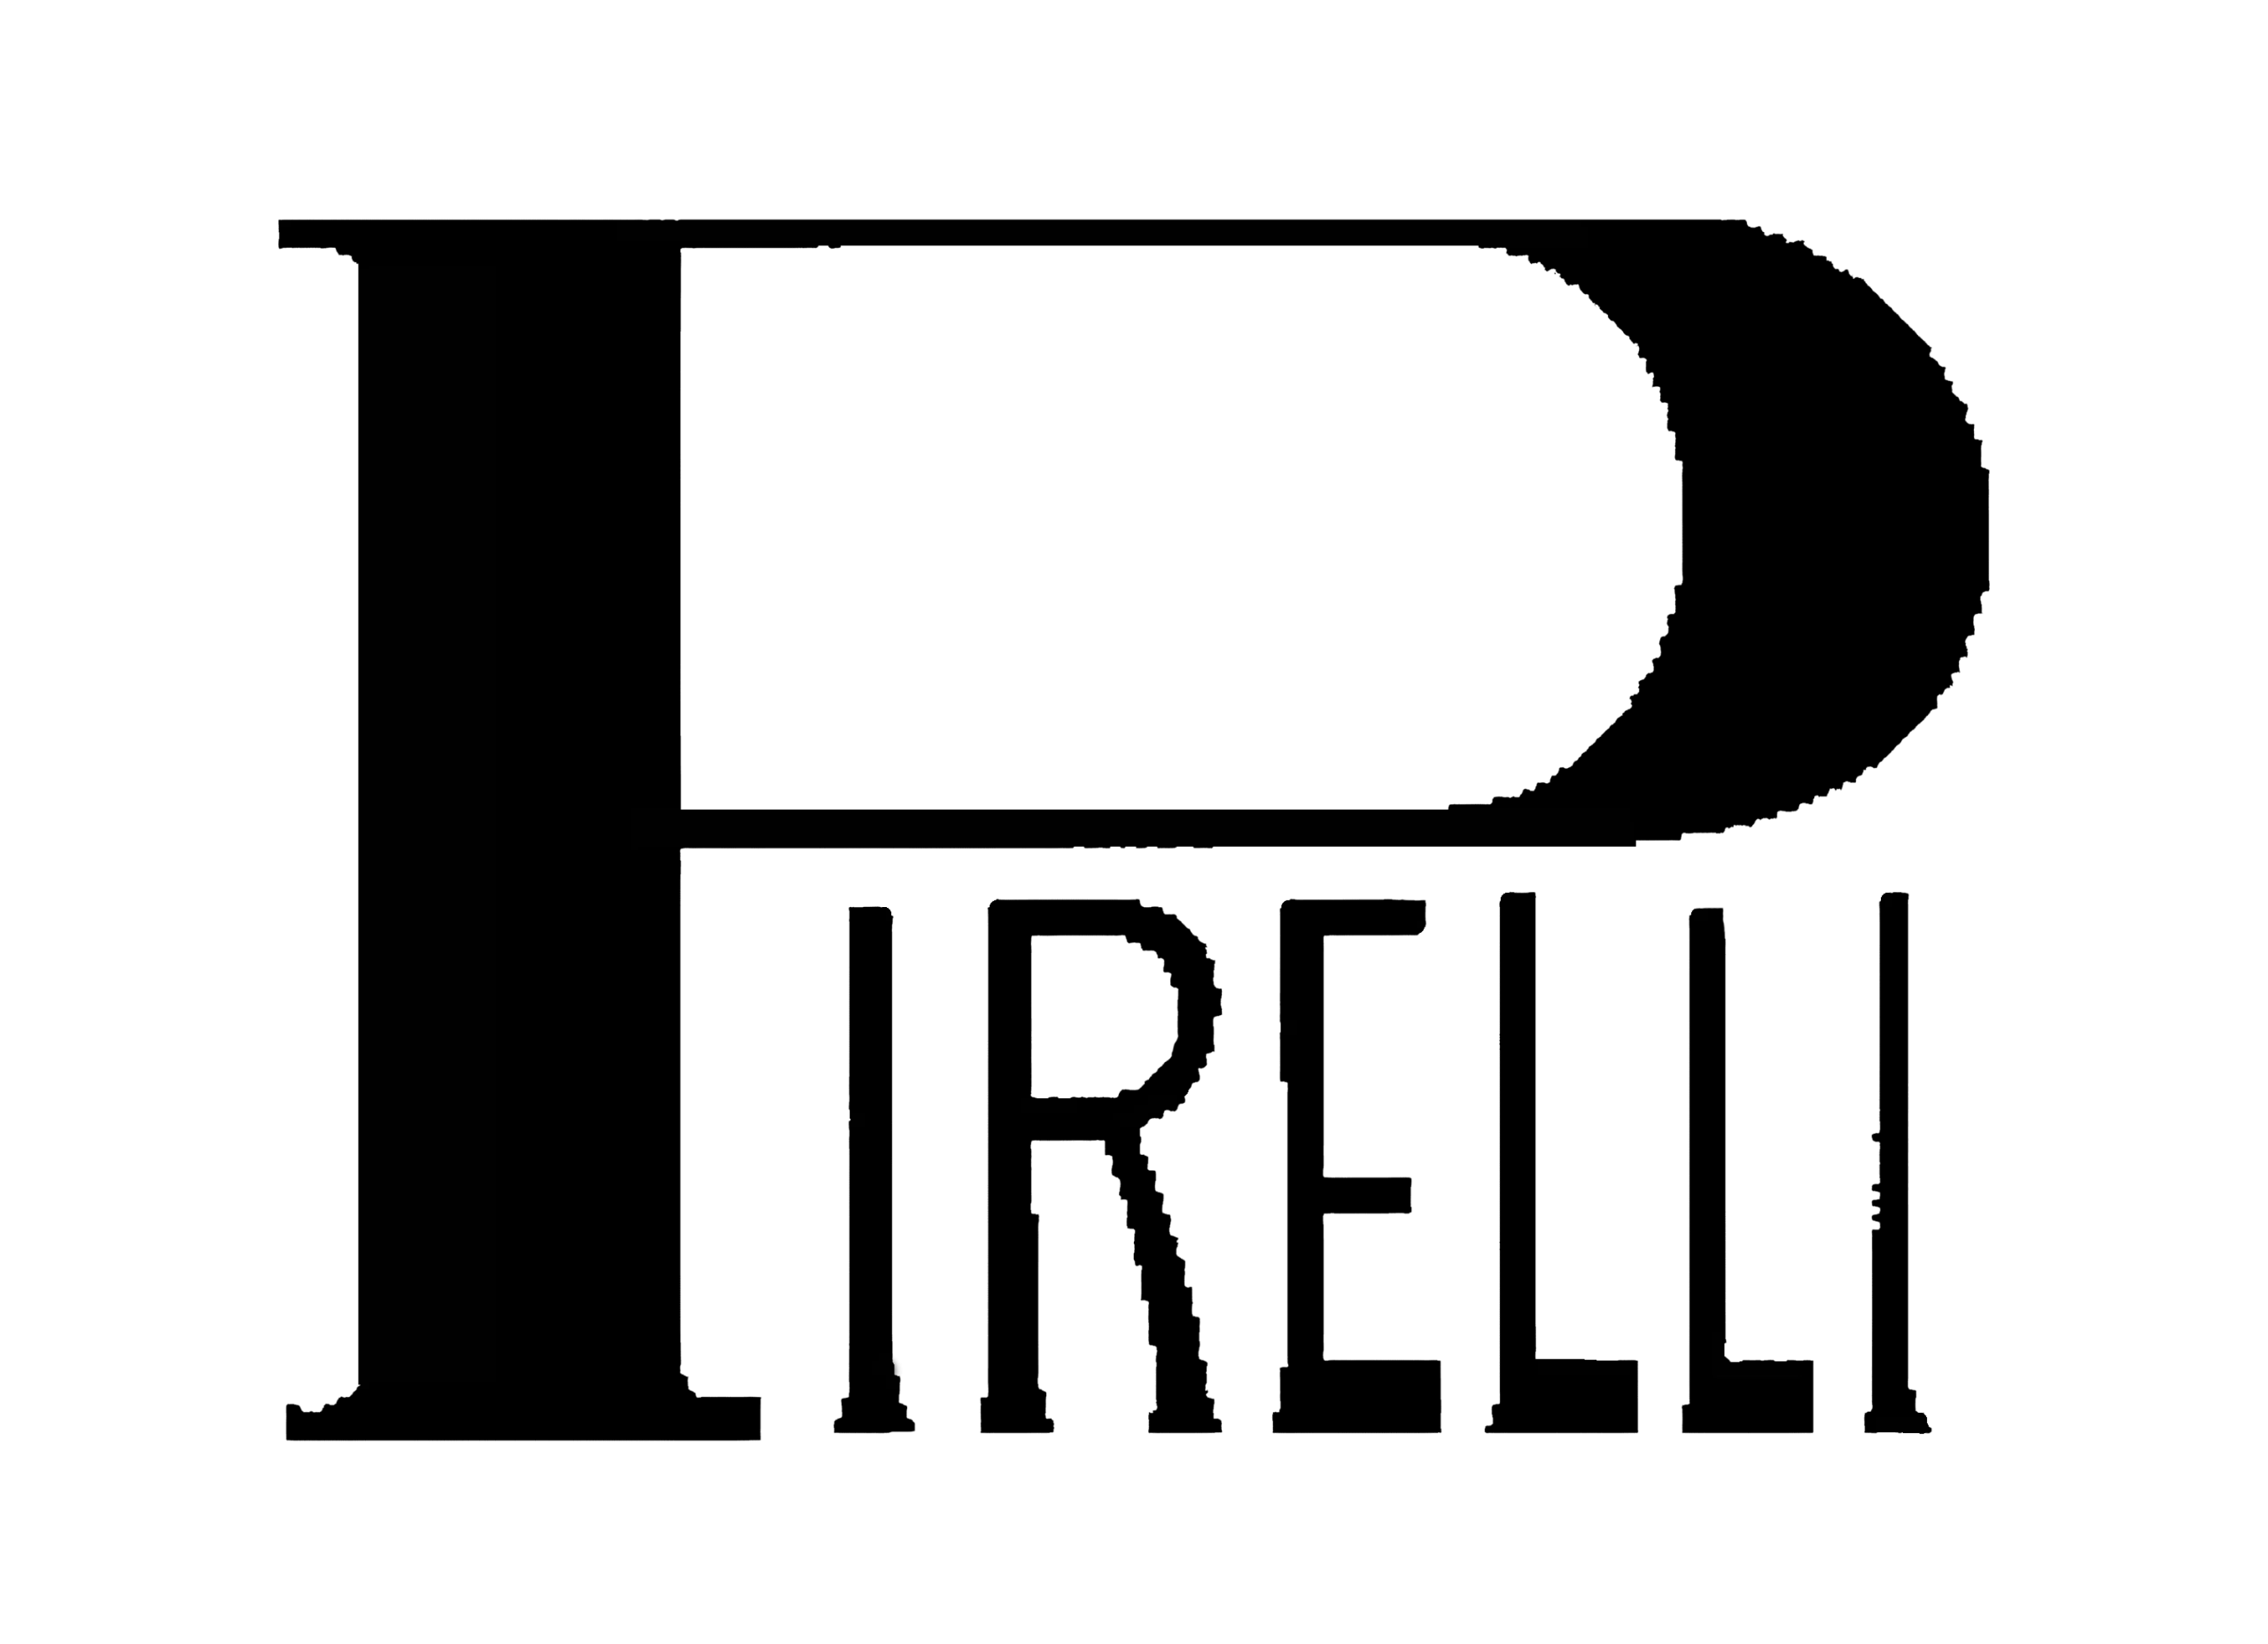 Pirelli logo 1910-1914